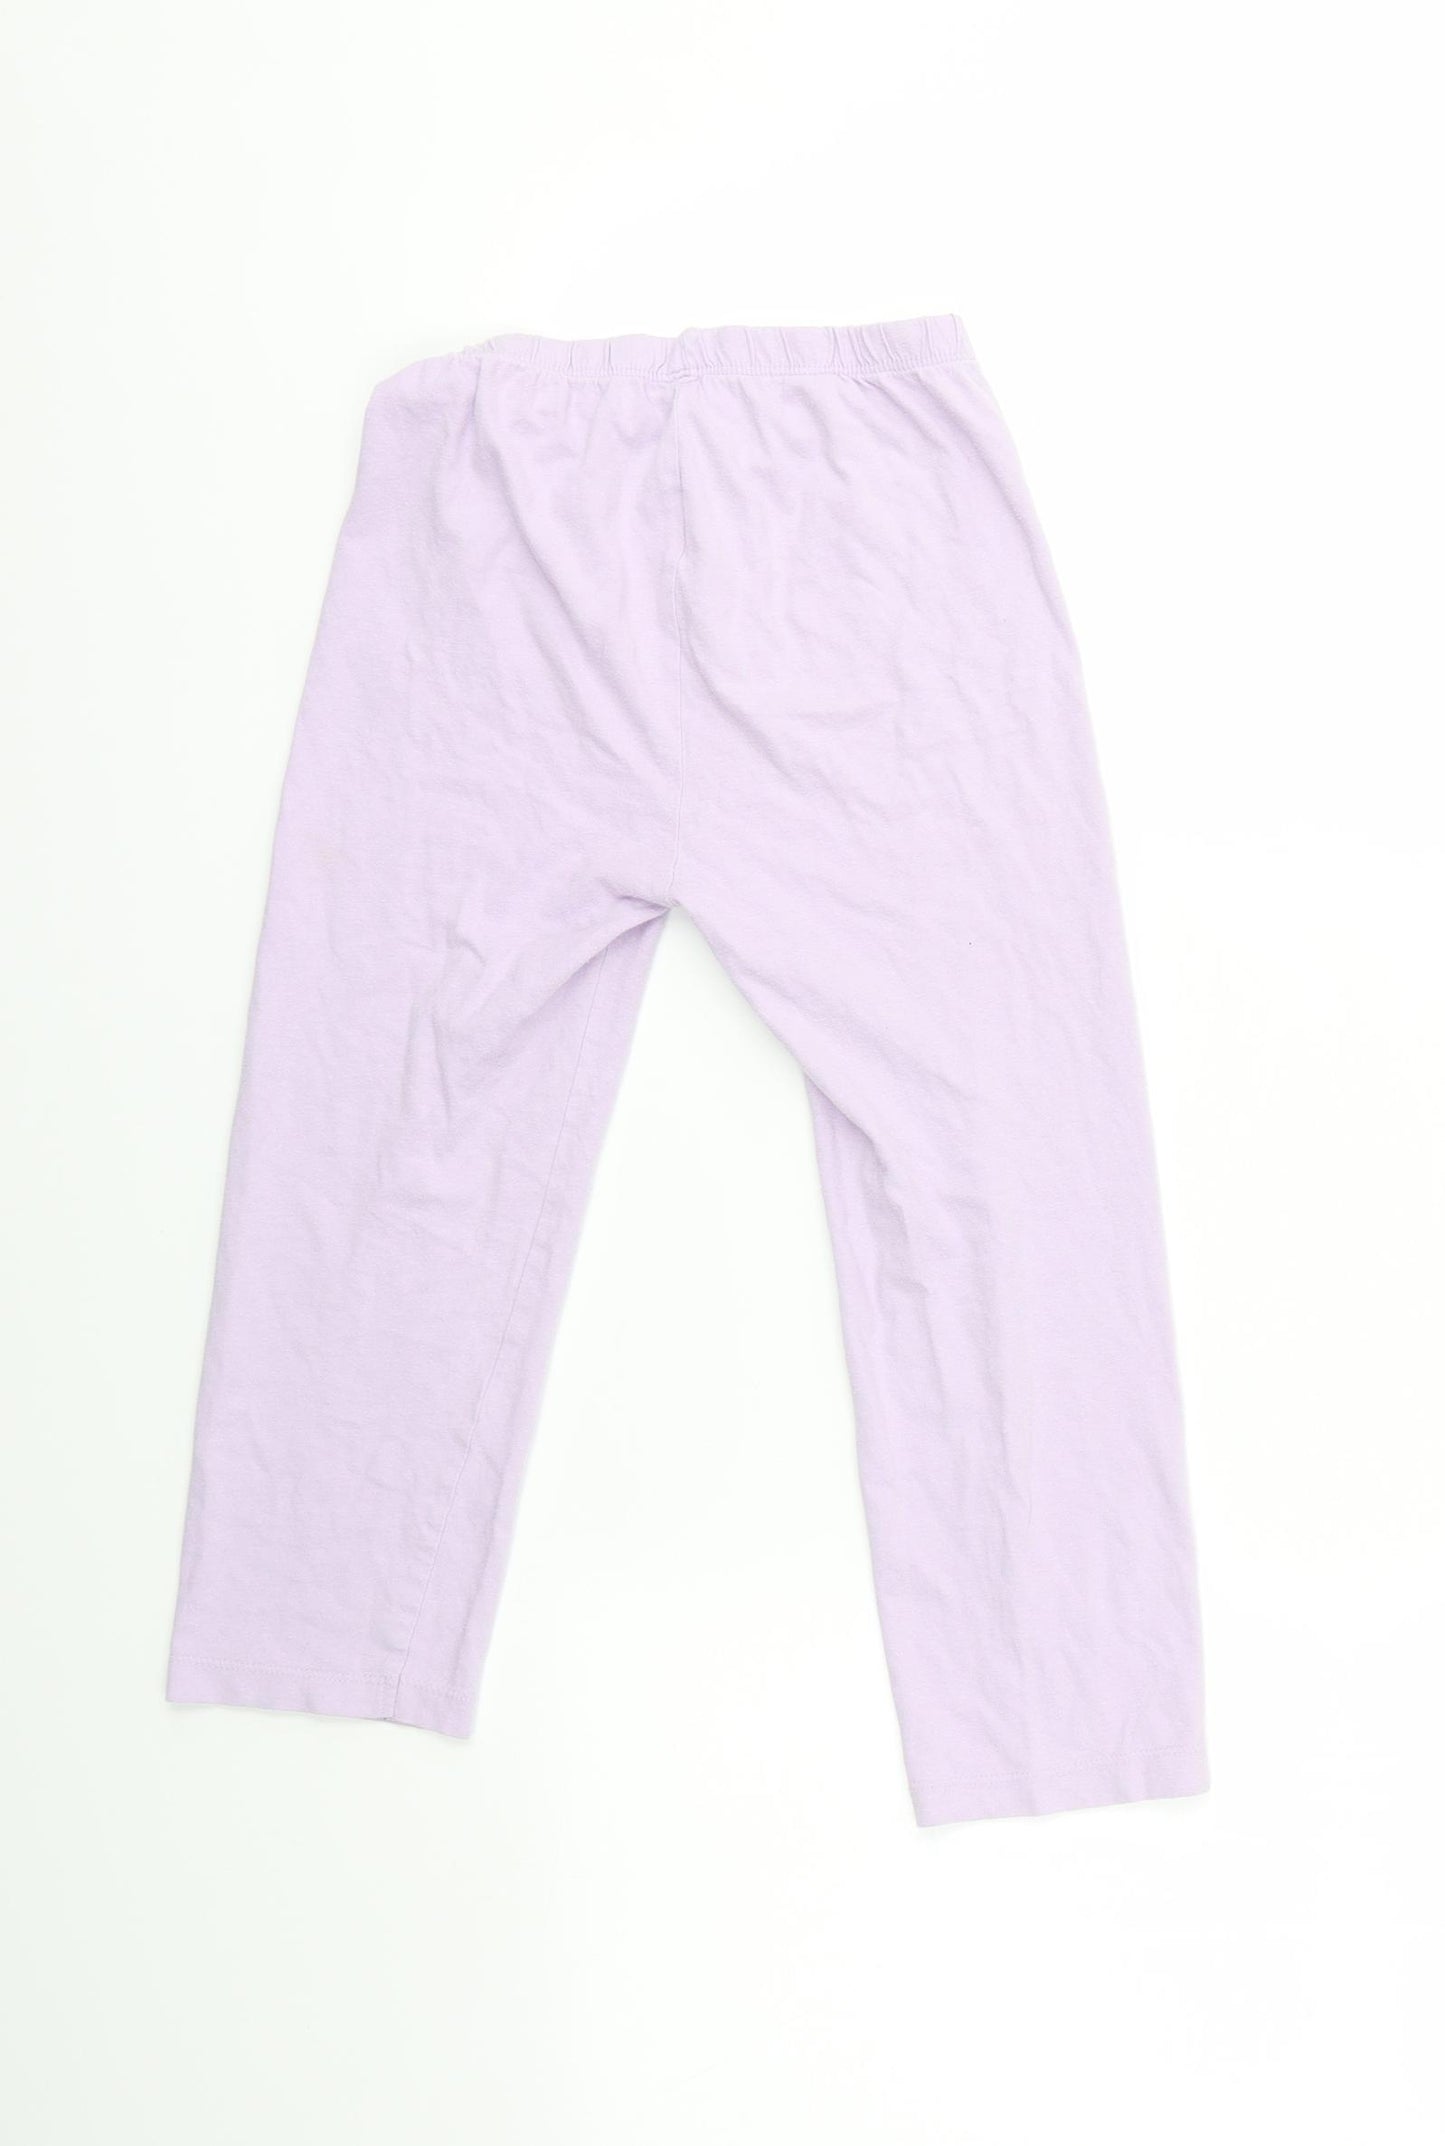 Primark Girls Purple Solid   Pyjama Pants Size 4-5 Years  - Elsa and Anna. Frozen